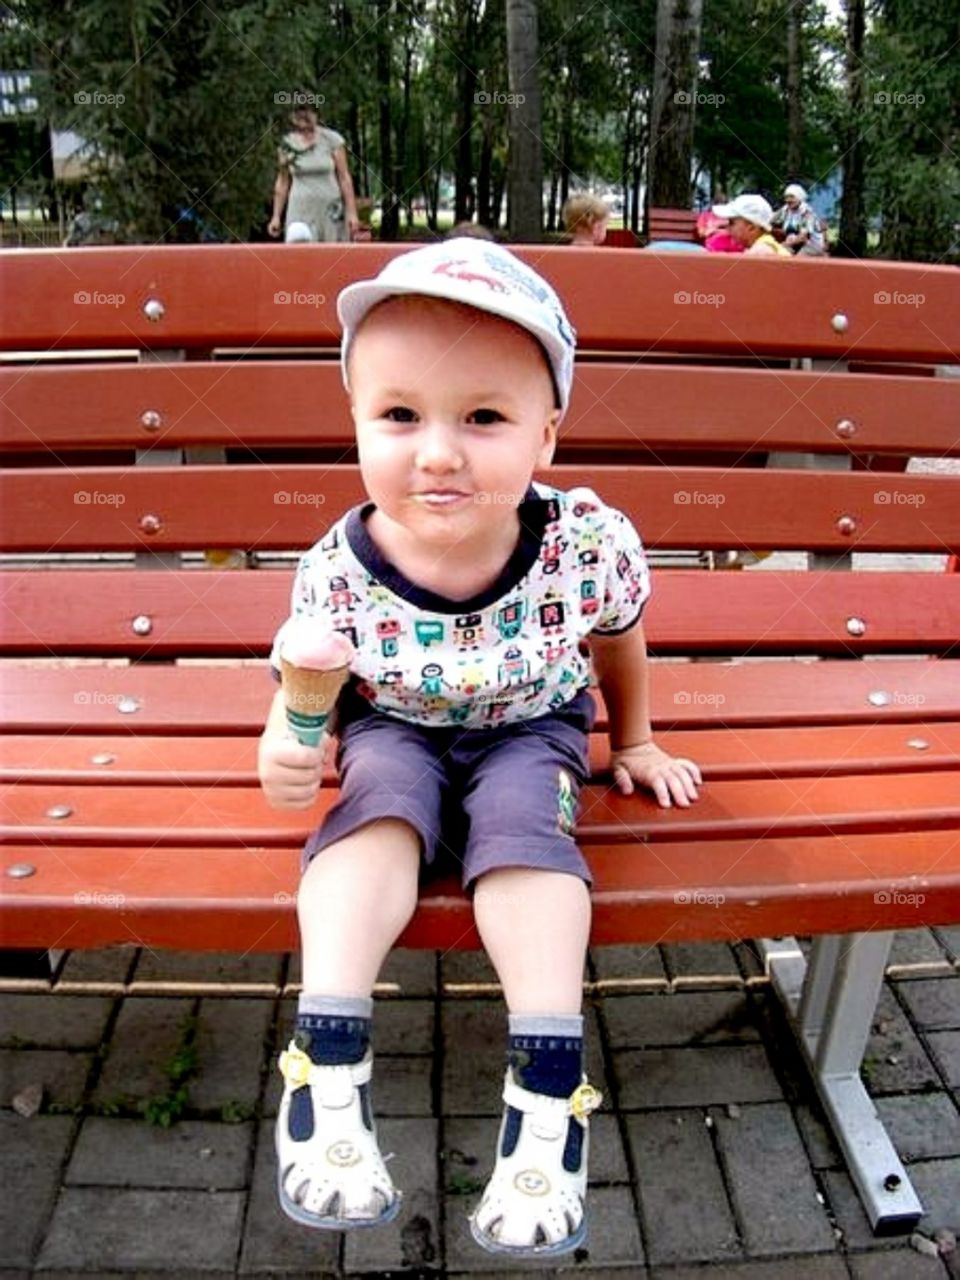 Child, boy, summer on the bench, eat ice cream, park